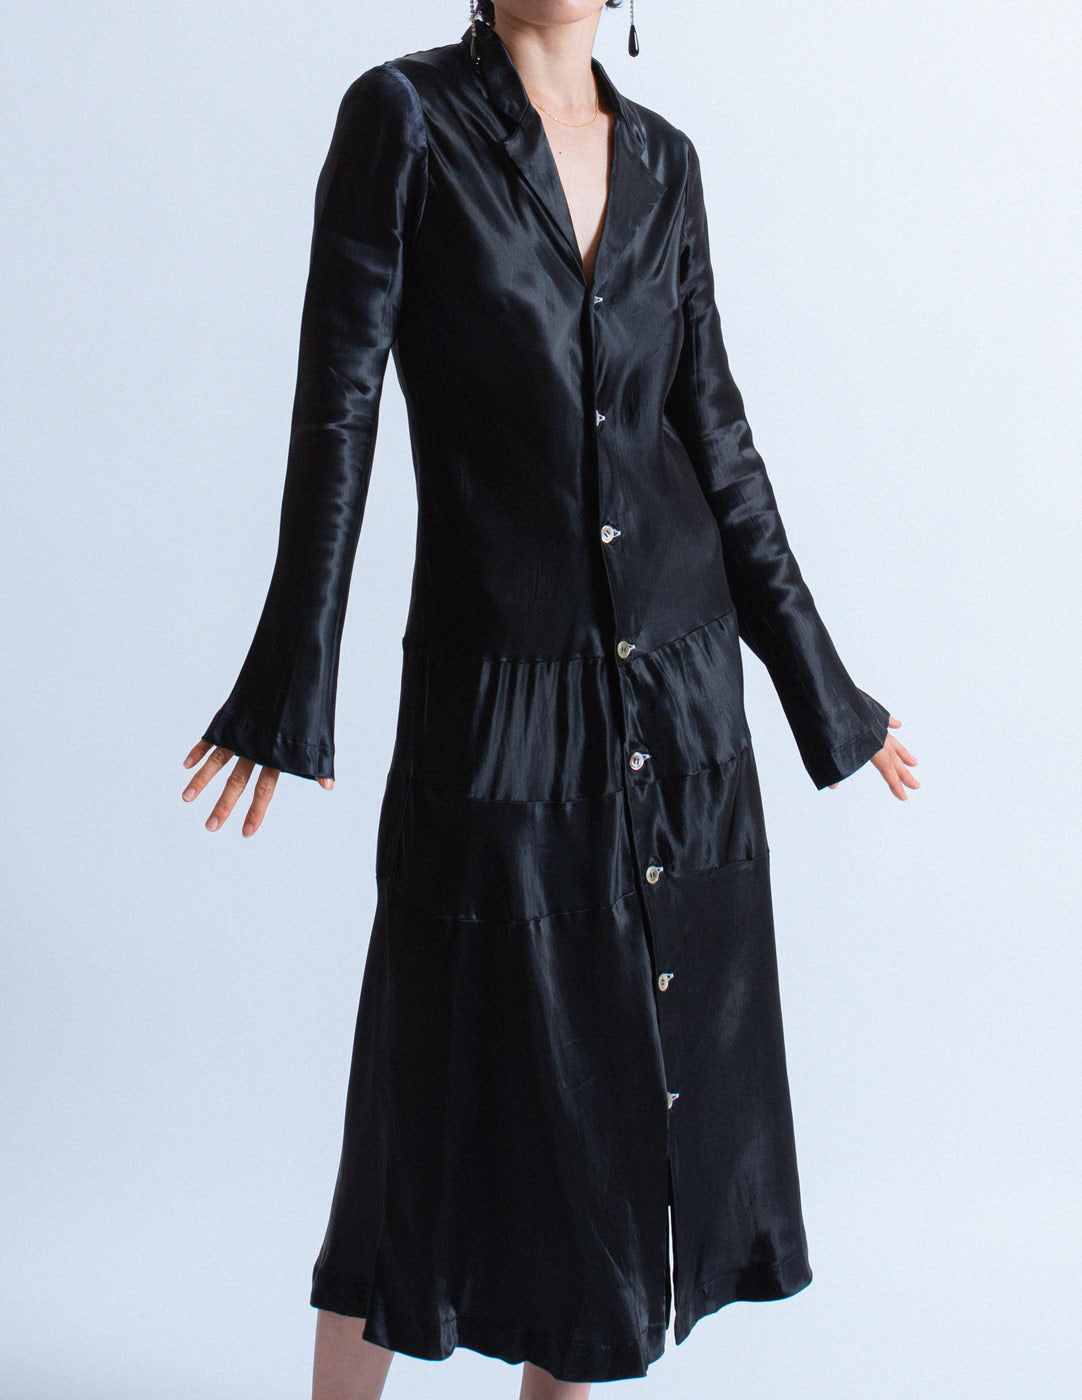 Comme des Garçons vintage black satin dress front detail